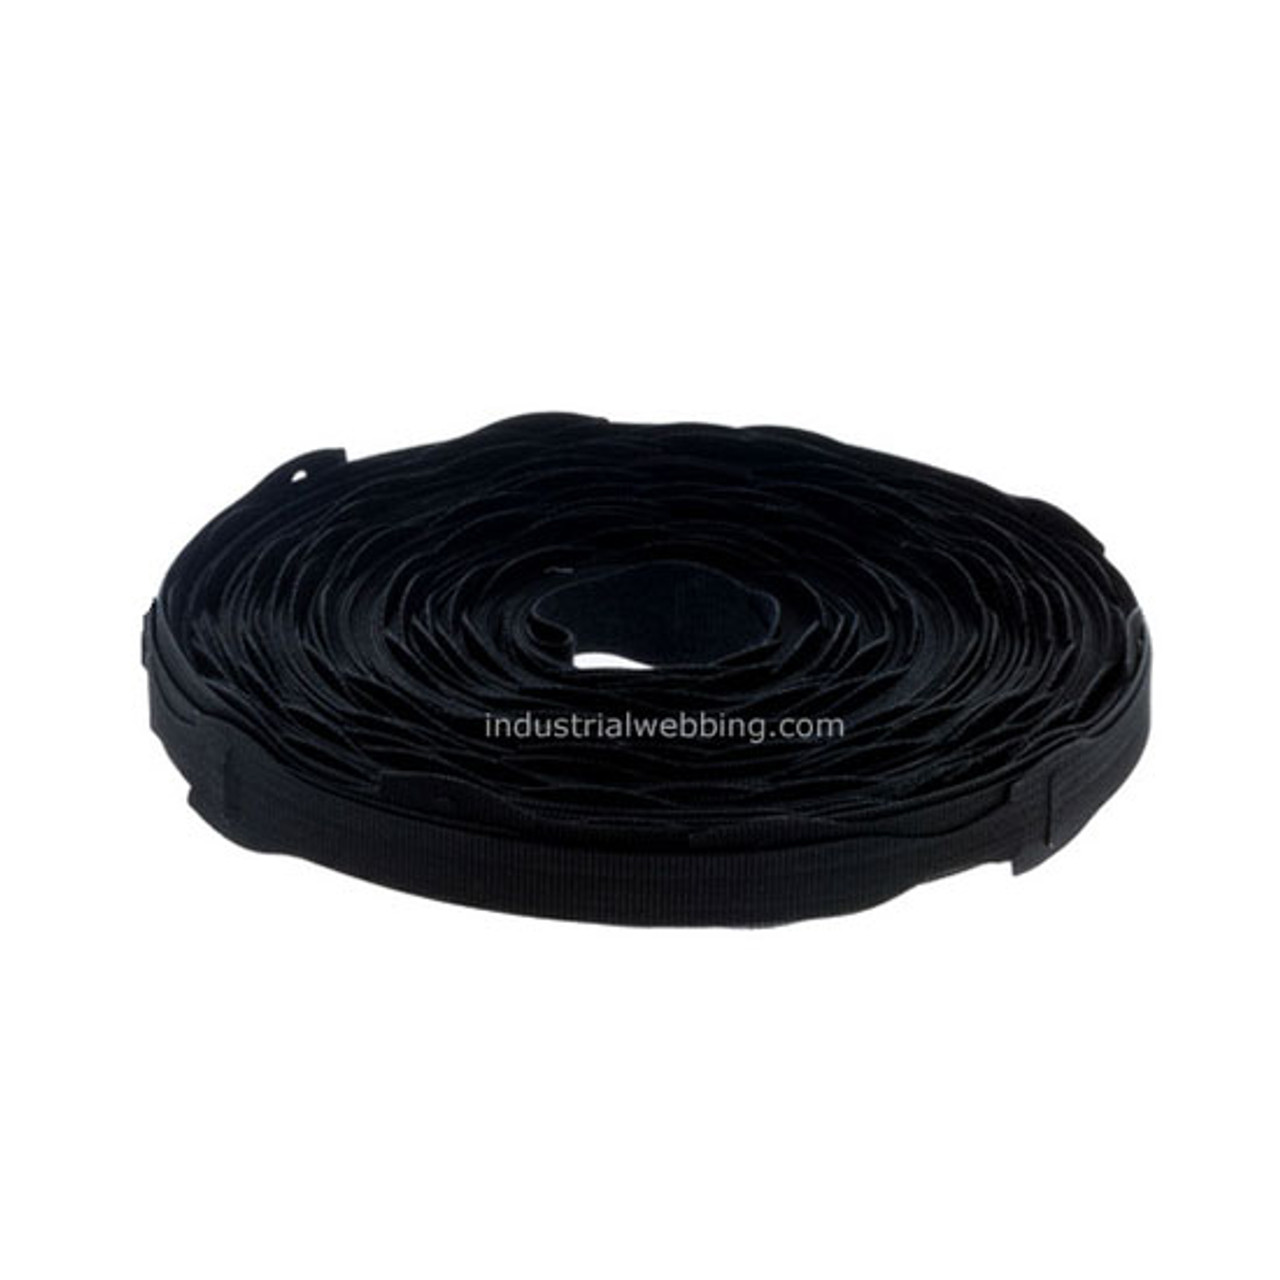 Velcro® Brand Cable Ties - 3/4 x 8, Black